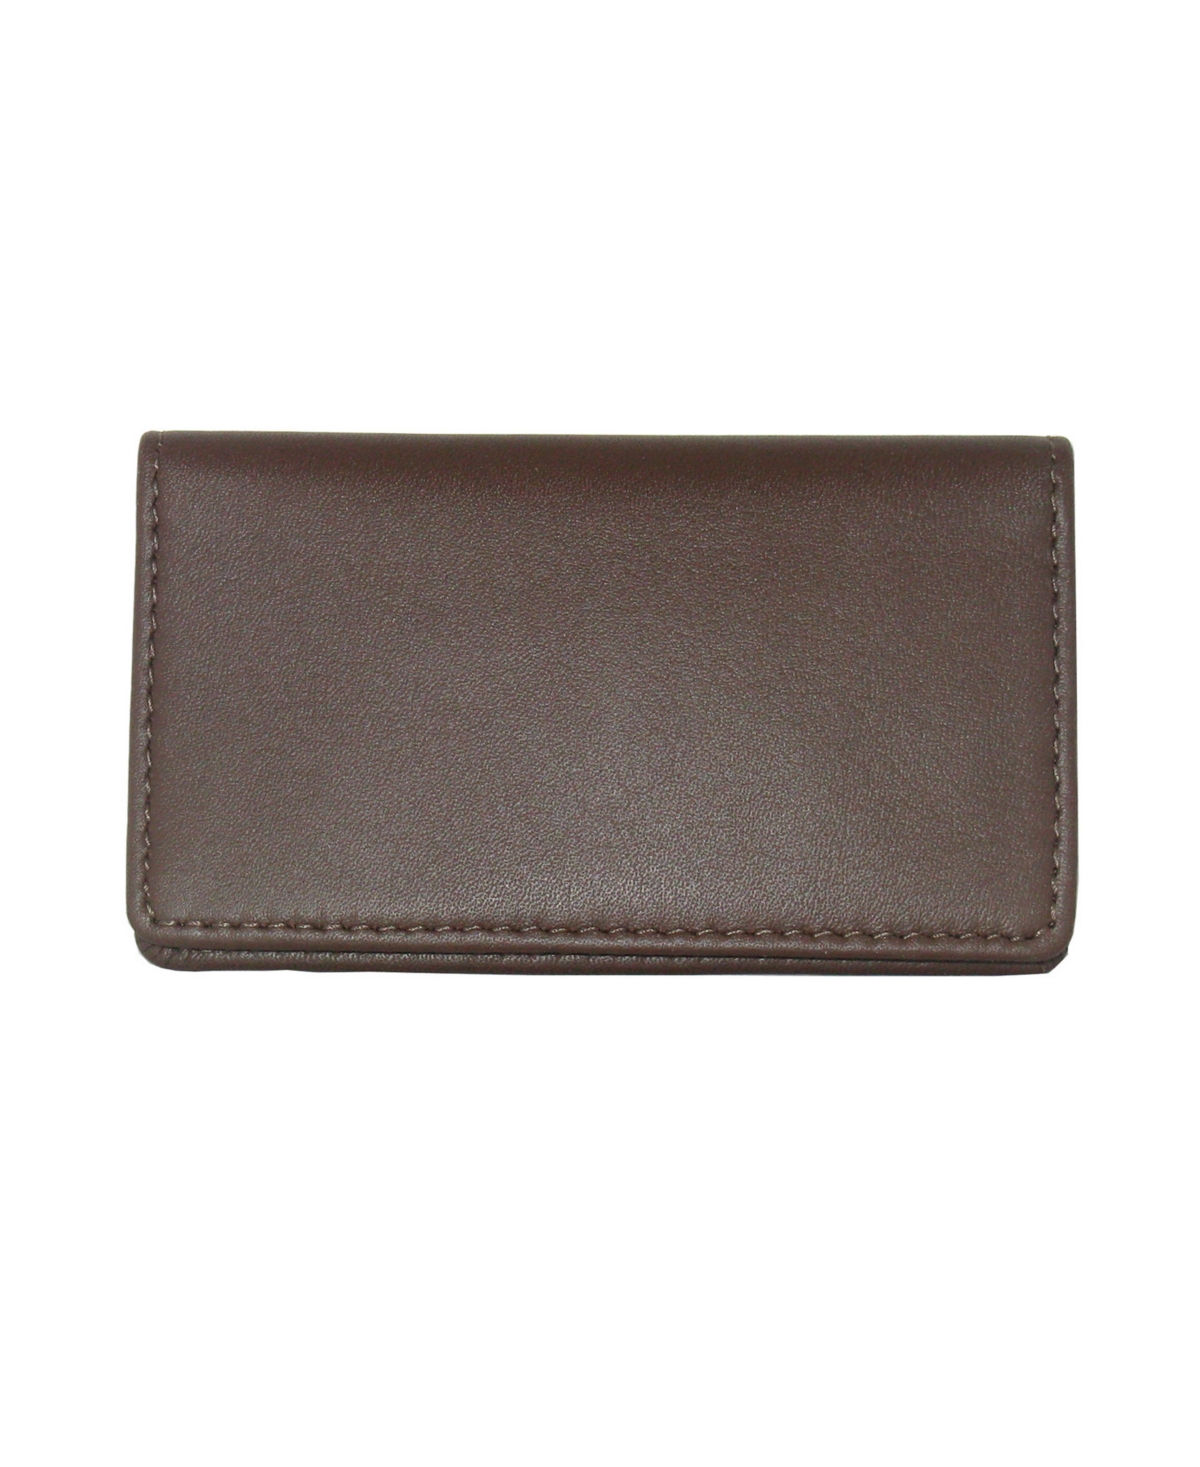 Royce Slim Business Card Case in Genuine Leather - Brown